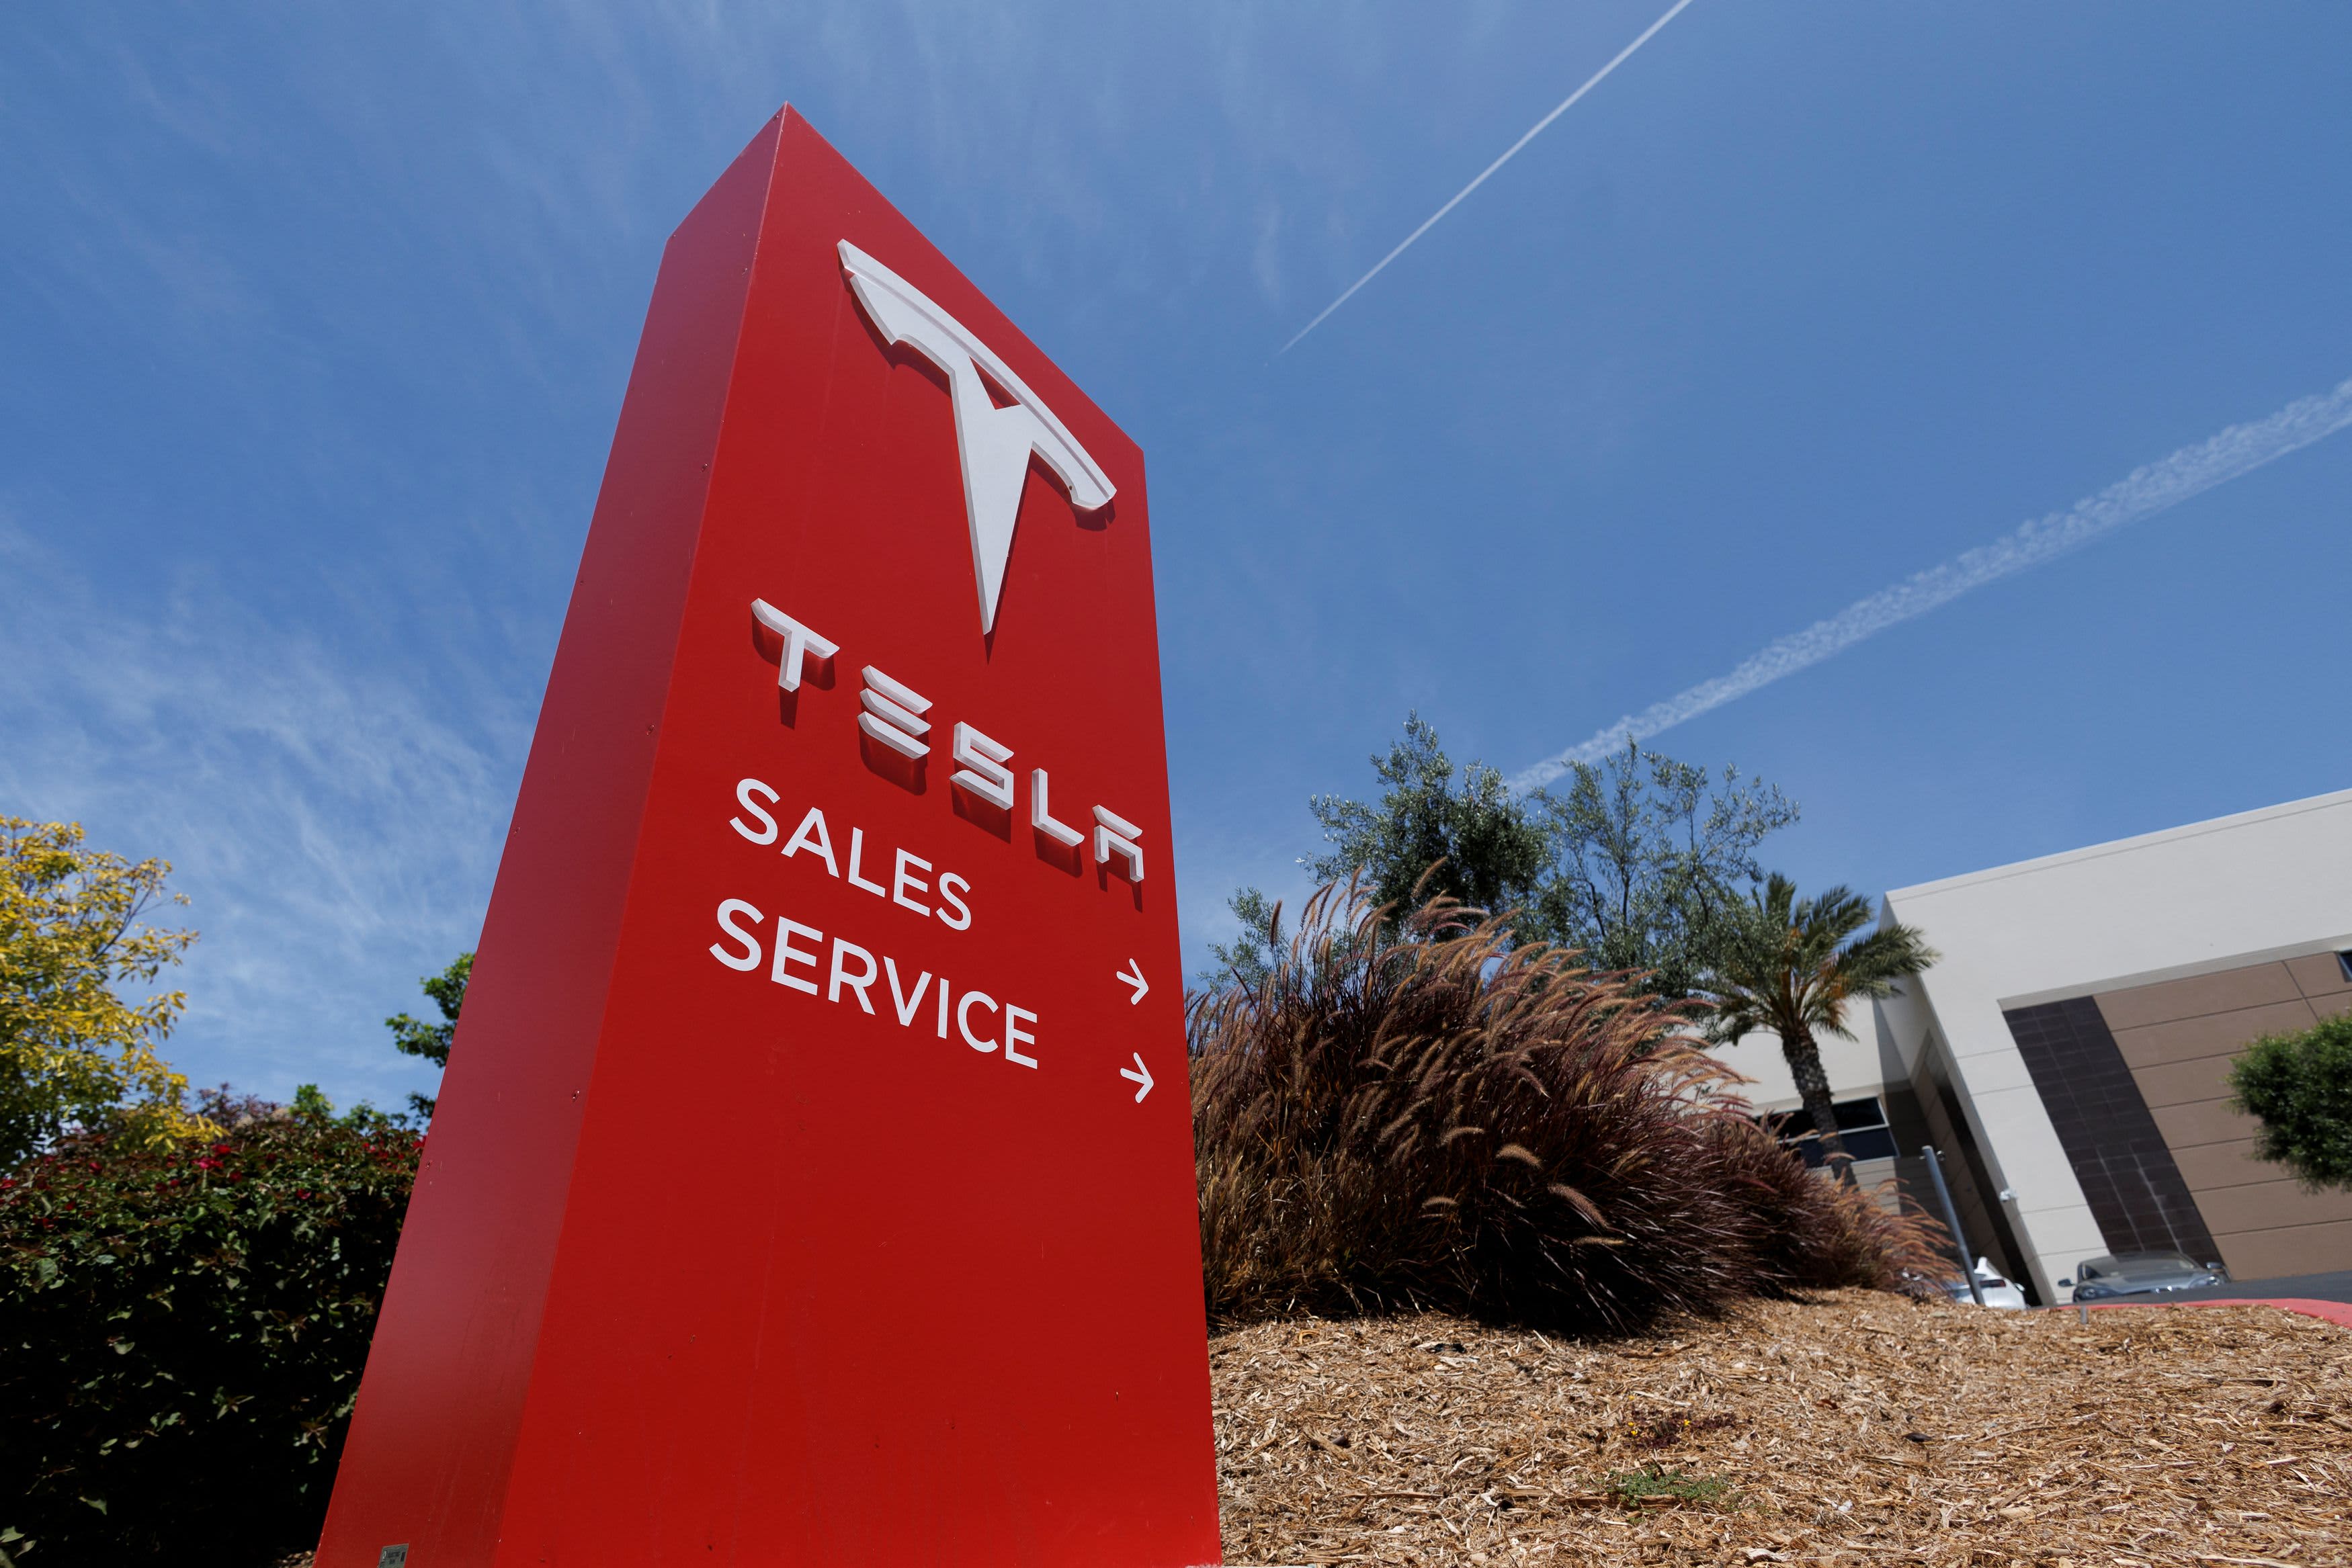 Oppenheimer downgrades Tesla, says Elon Musk's handling of Twitter could hurt electric vehicle maker